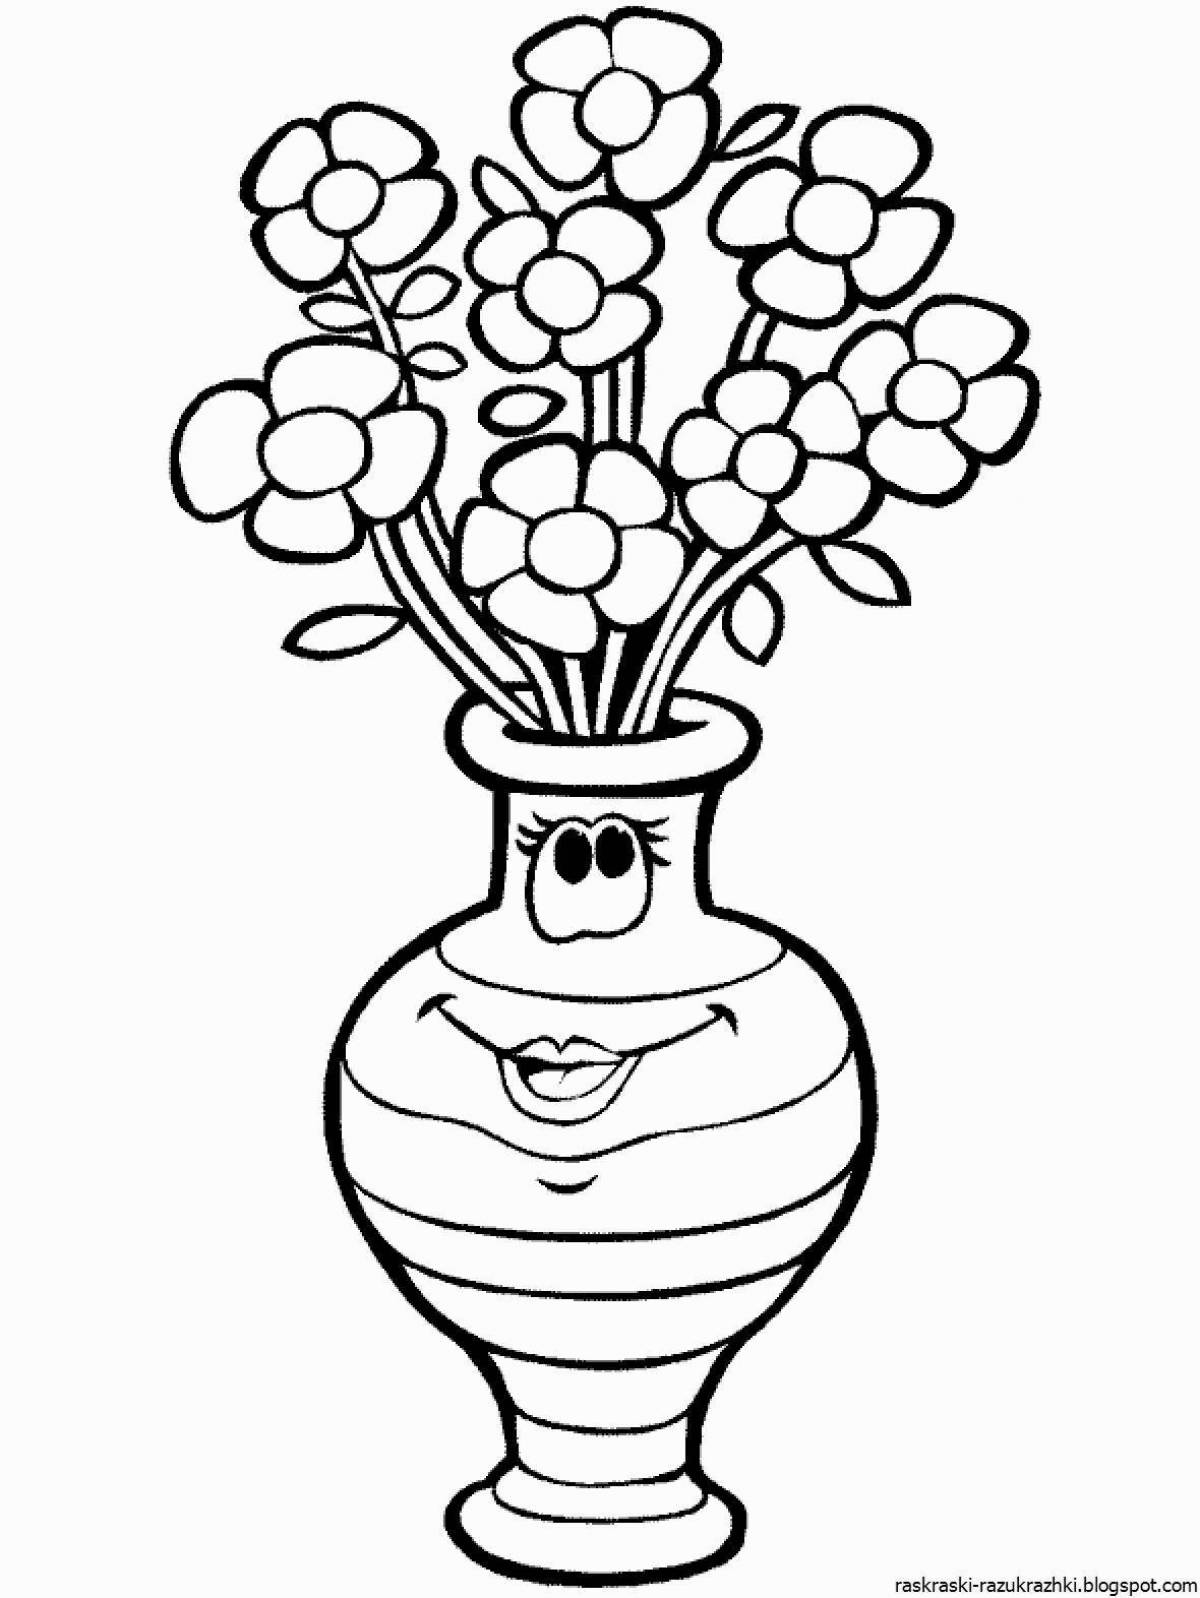 Generous coloring flower in a vase